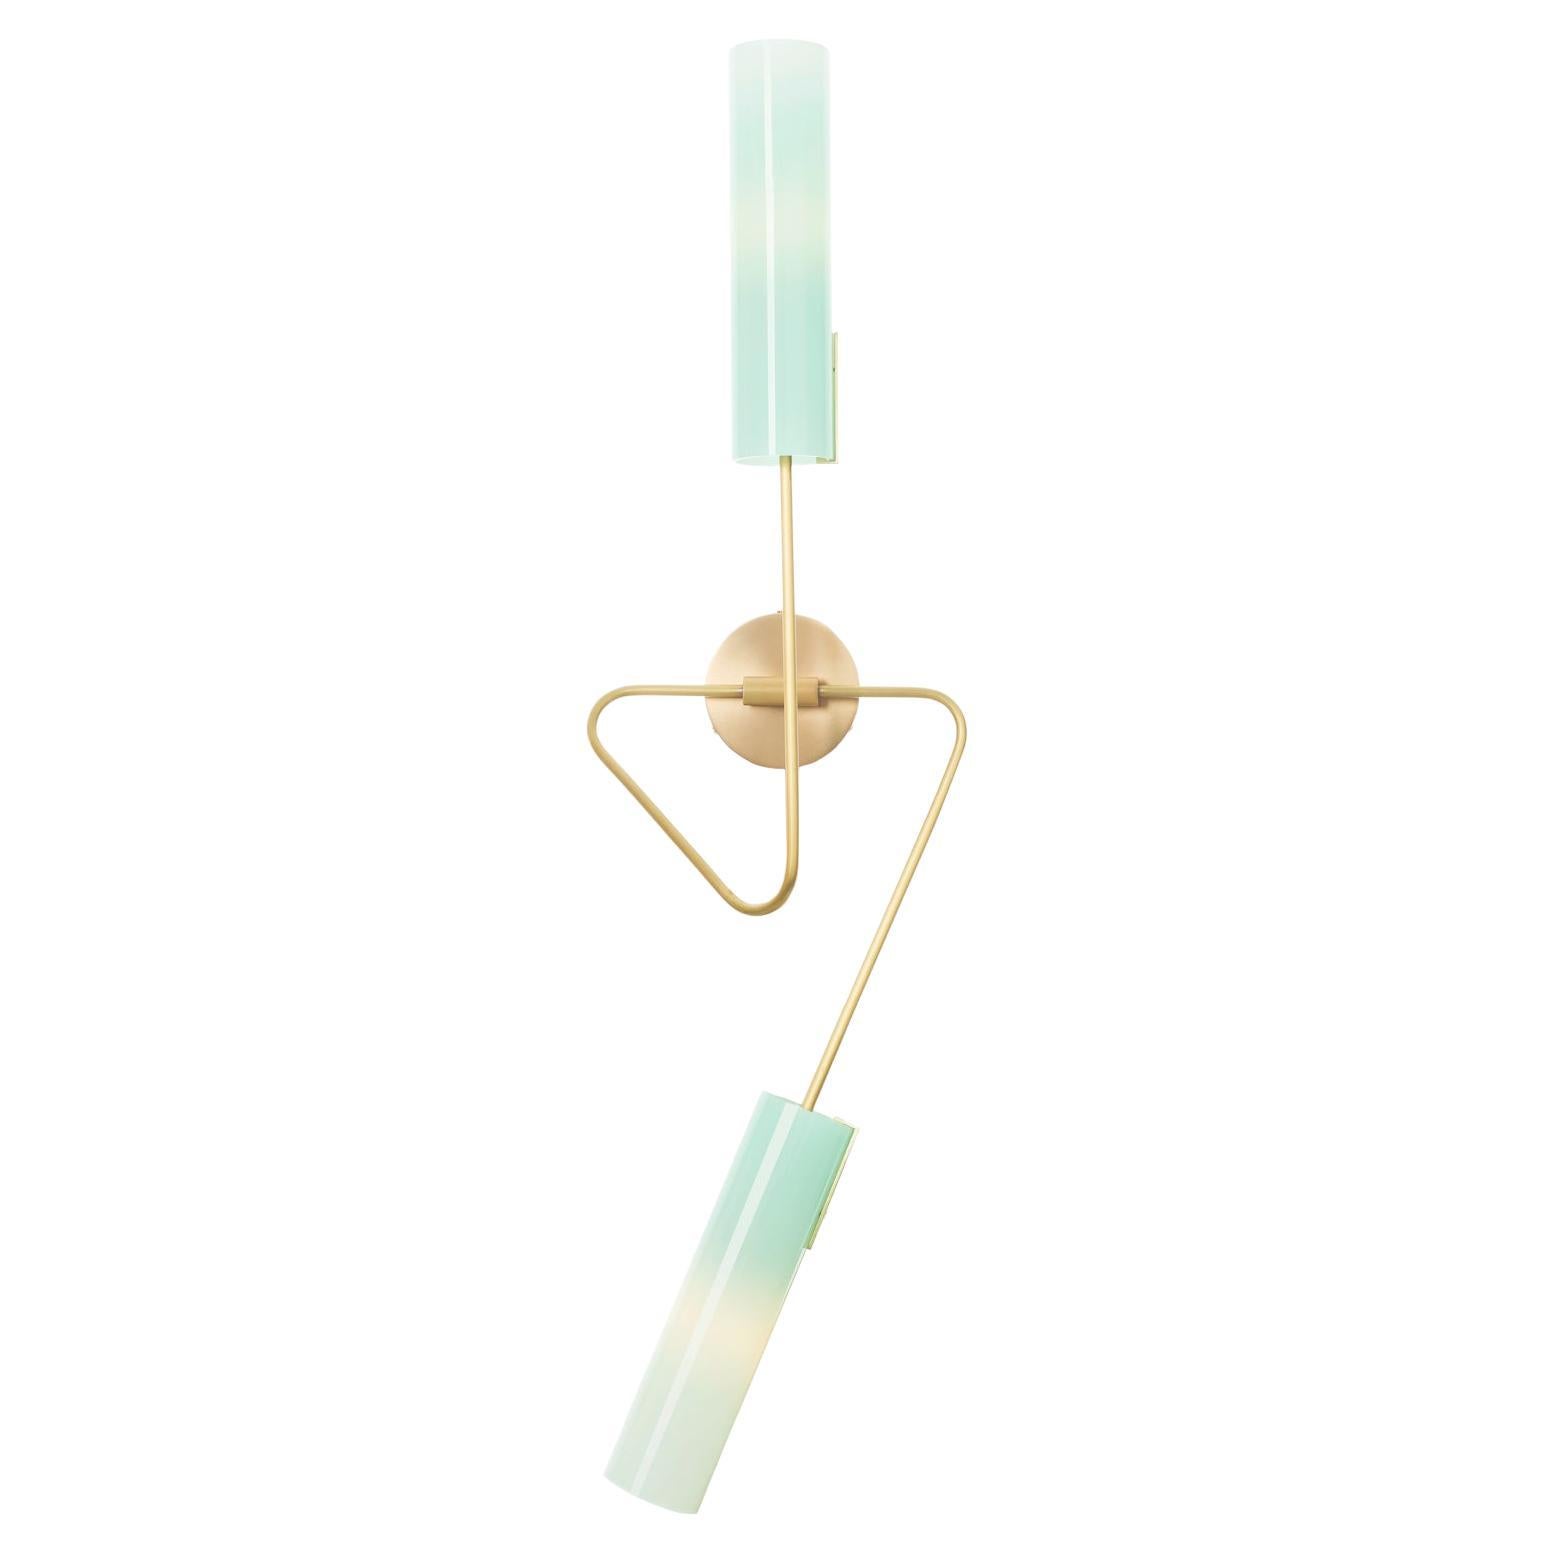 Continuum 02 Sconce: Satin Brass/Aqua Glass Shades by Avram Rusu Studio For Sale